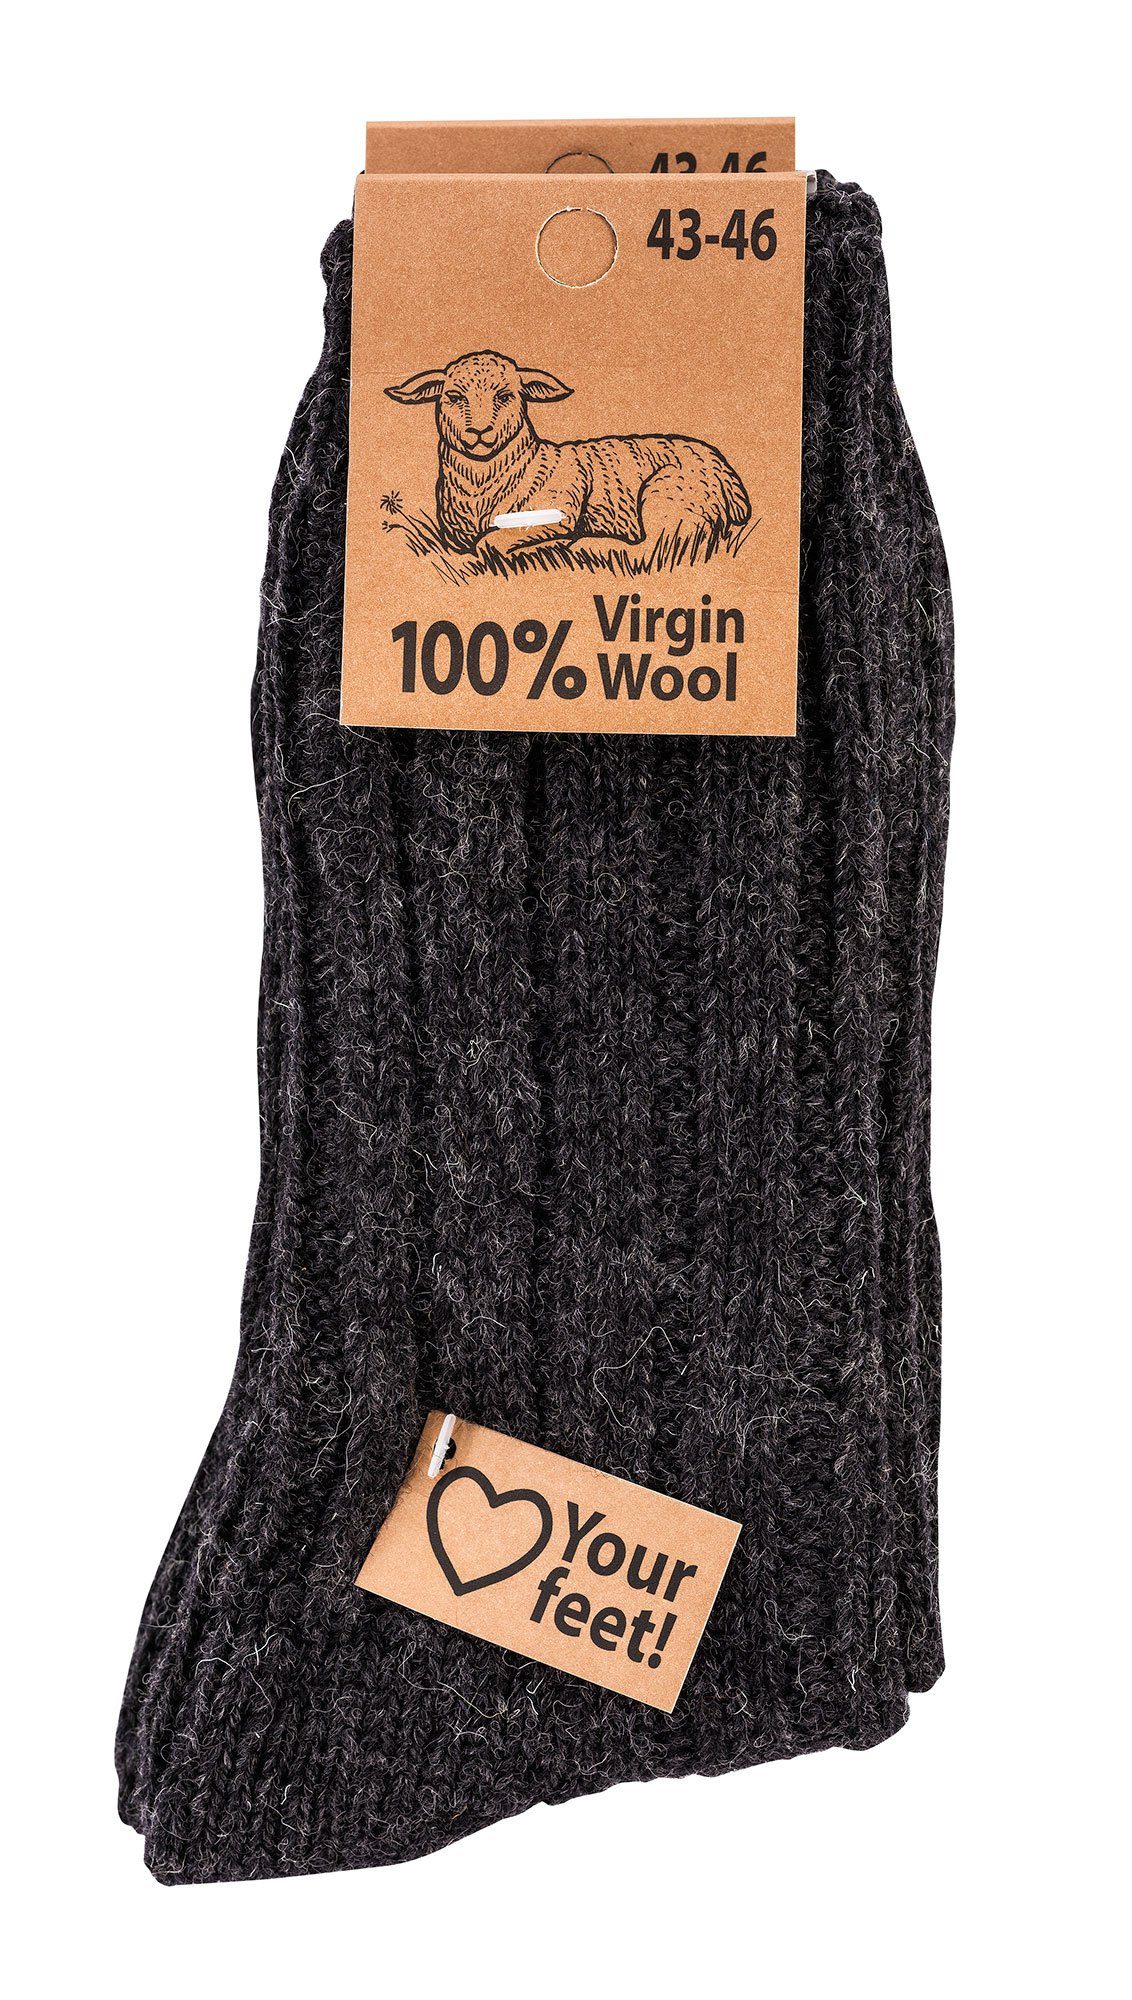 Wowerat Wool" Paar) Schafwolle anthrazit "Virgin Warme Socken (2 Grobstrick 100% Wollsocken